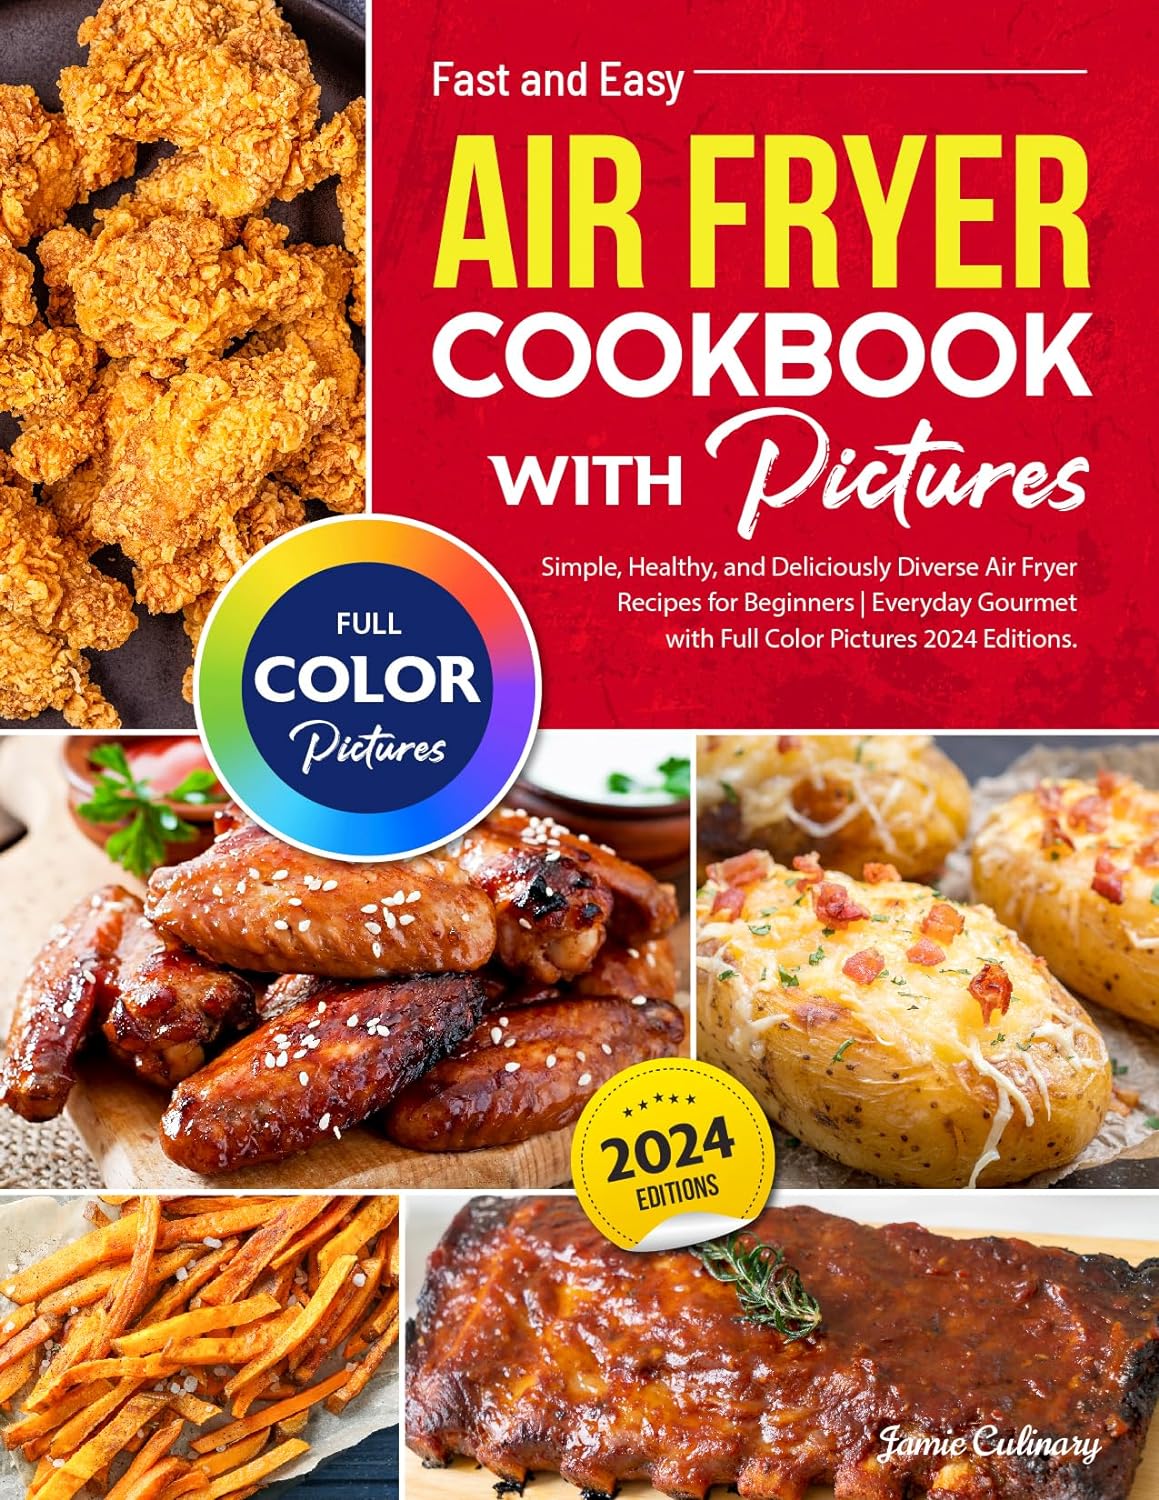 Free Amazon Cookbooks: Air Fryer, Instant Pot, Slow Cooker, Copycat, Pasta, Korean, Thai, Asian, Taiwan, Indian, Lebanese, Fajita, Tapas, Cannabis, Camping, Diner, MANY MORE !!!